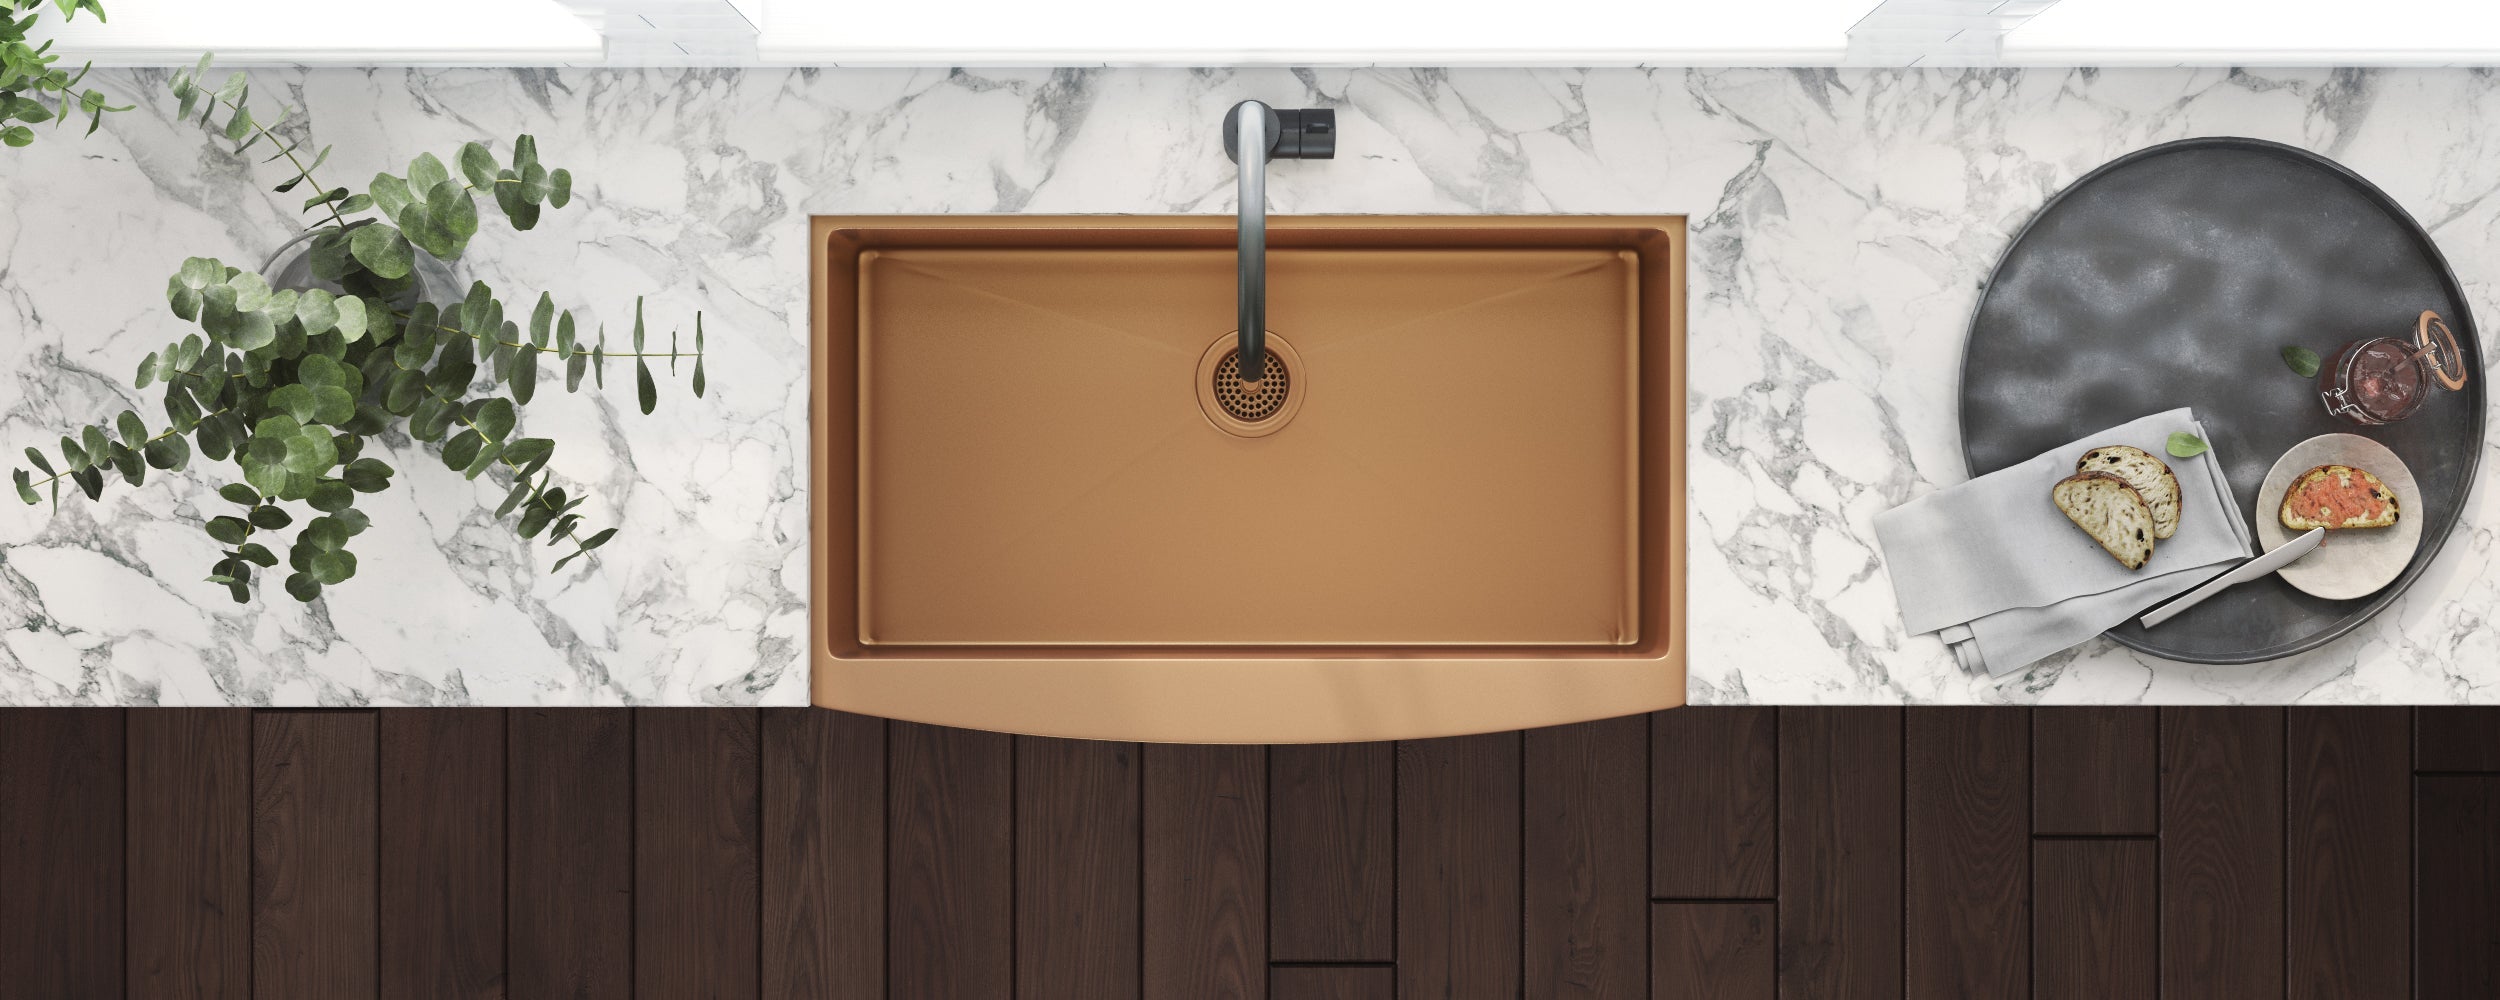 Ruvati 33" Copper Tone Matte Bronze Apron Front Stainless Steel Kitchen Sink